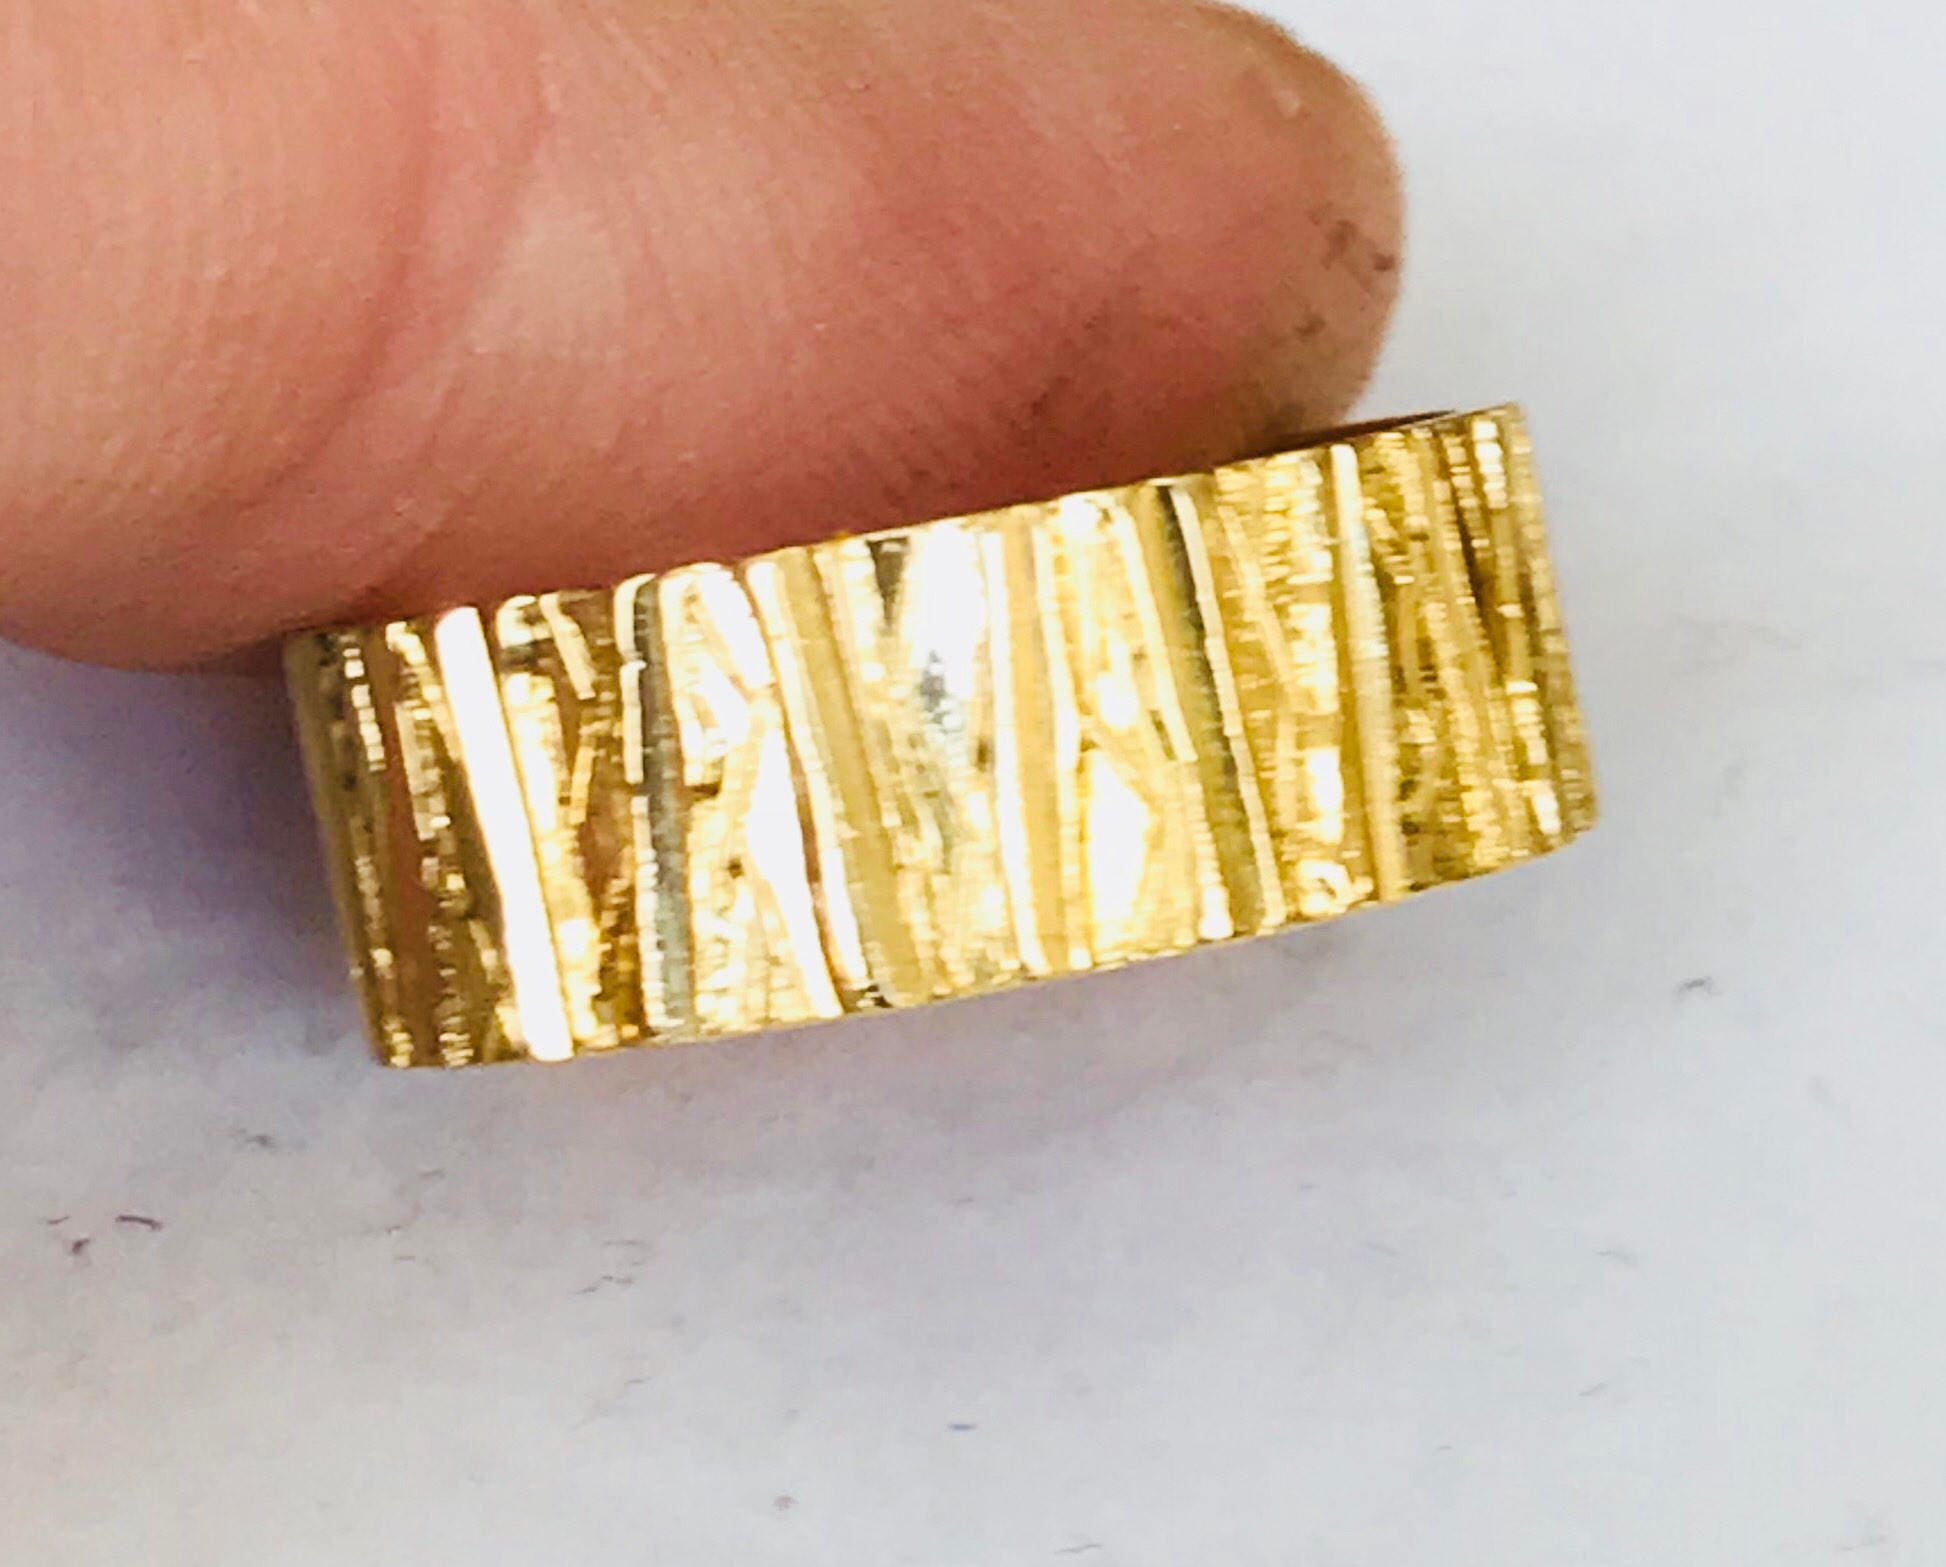 Stunning vintage 18ct gold bark effect wedding ring - Birmingham 1976